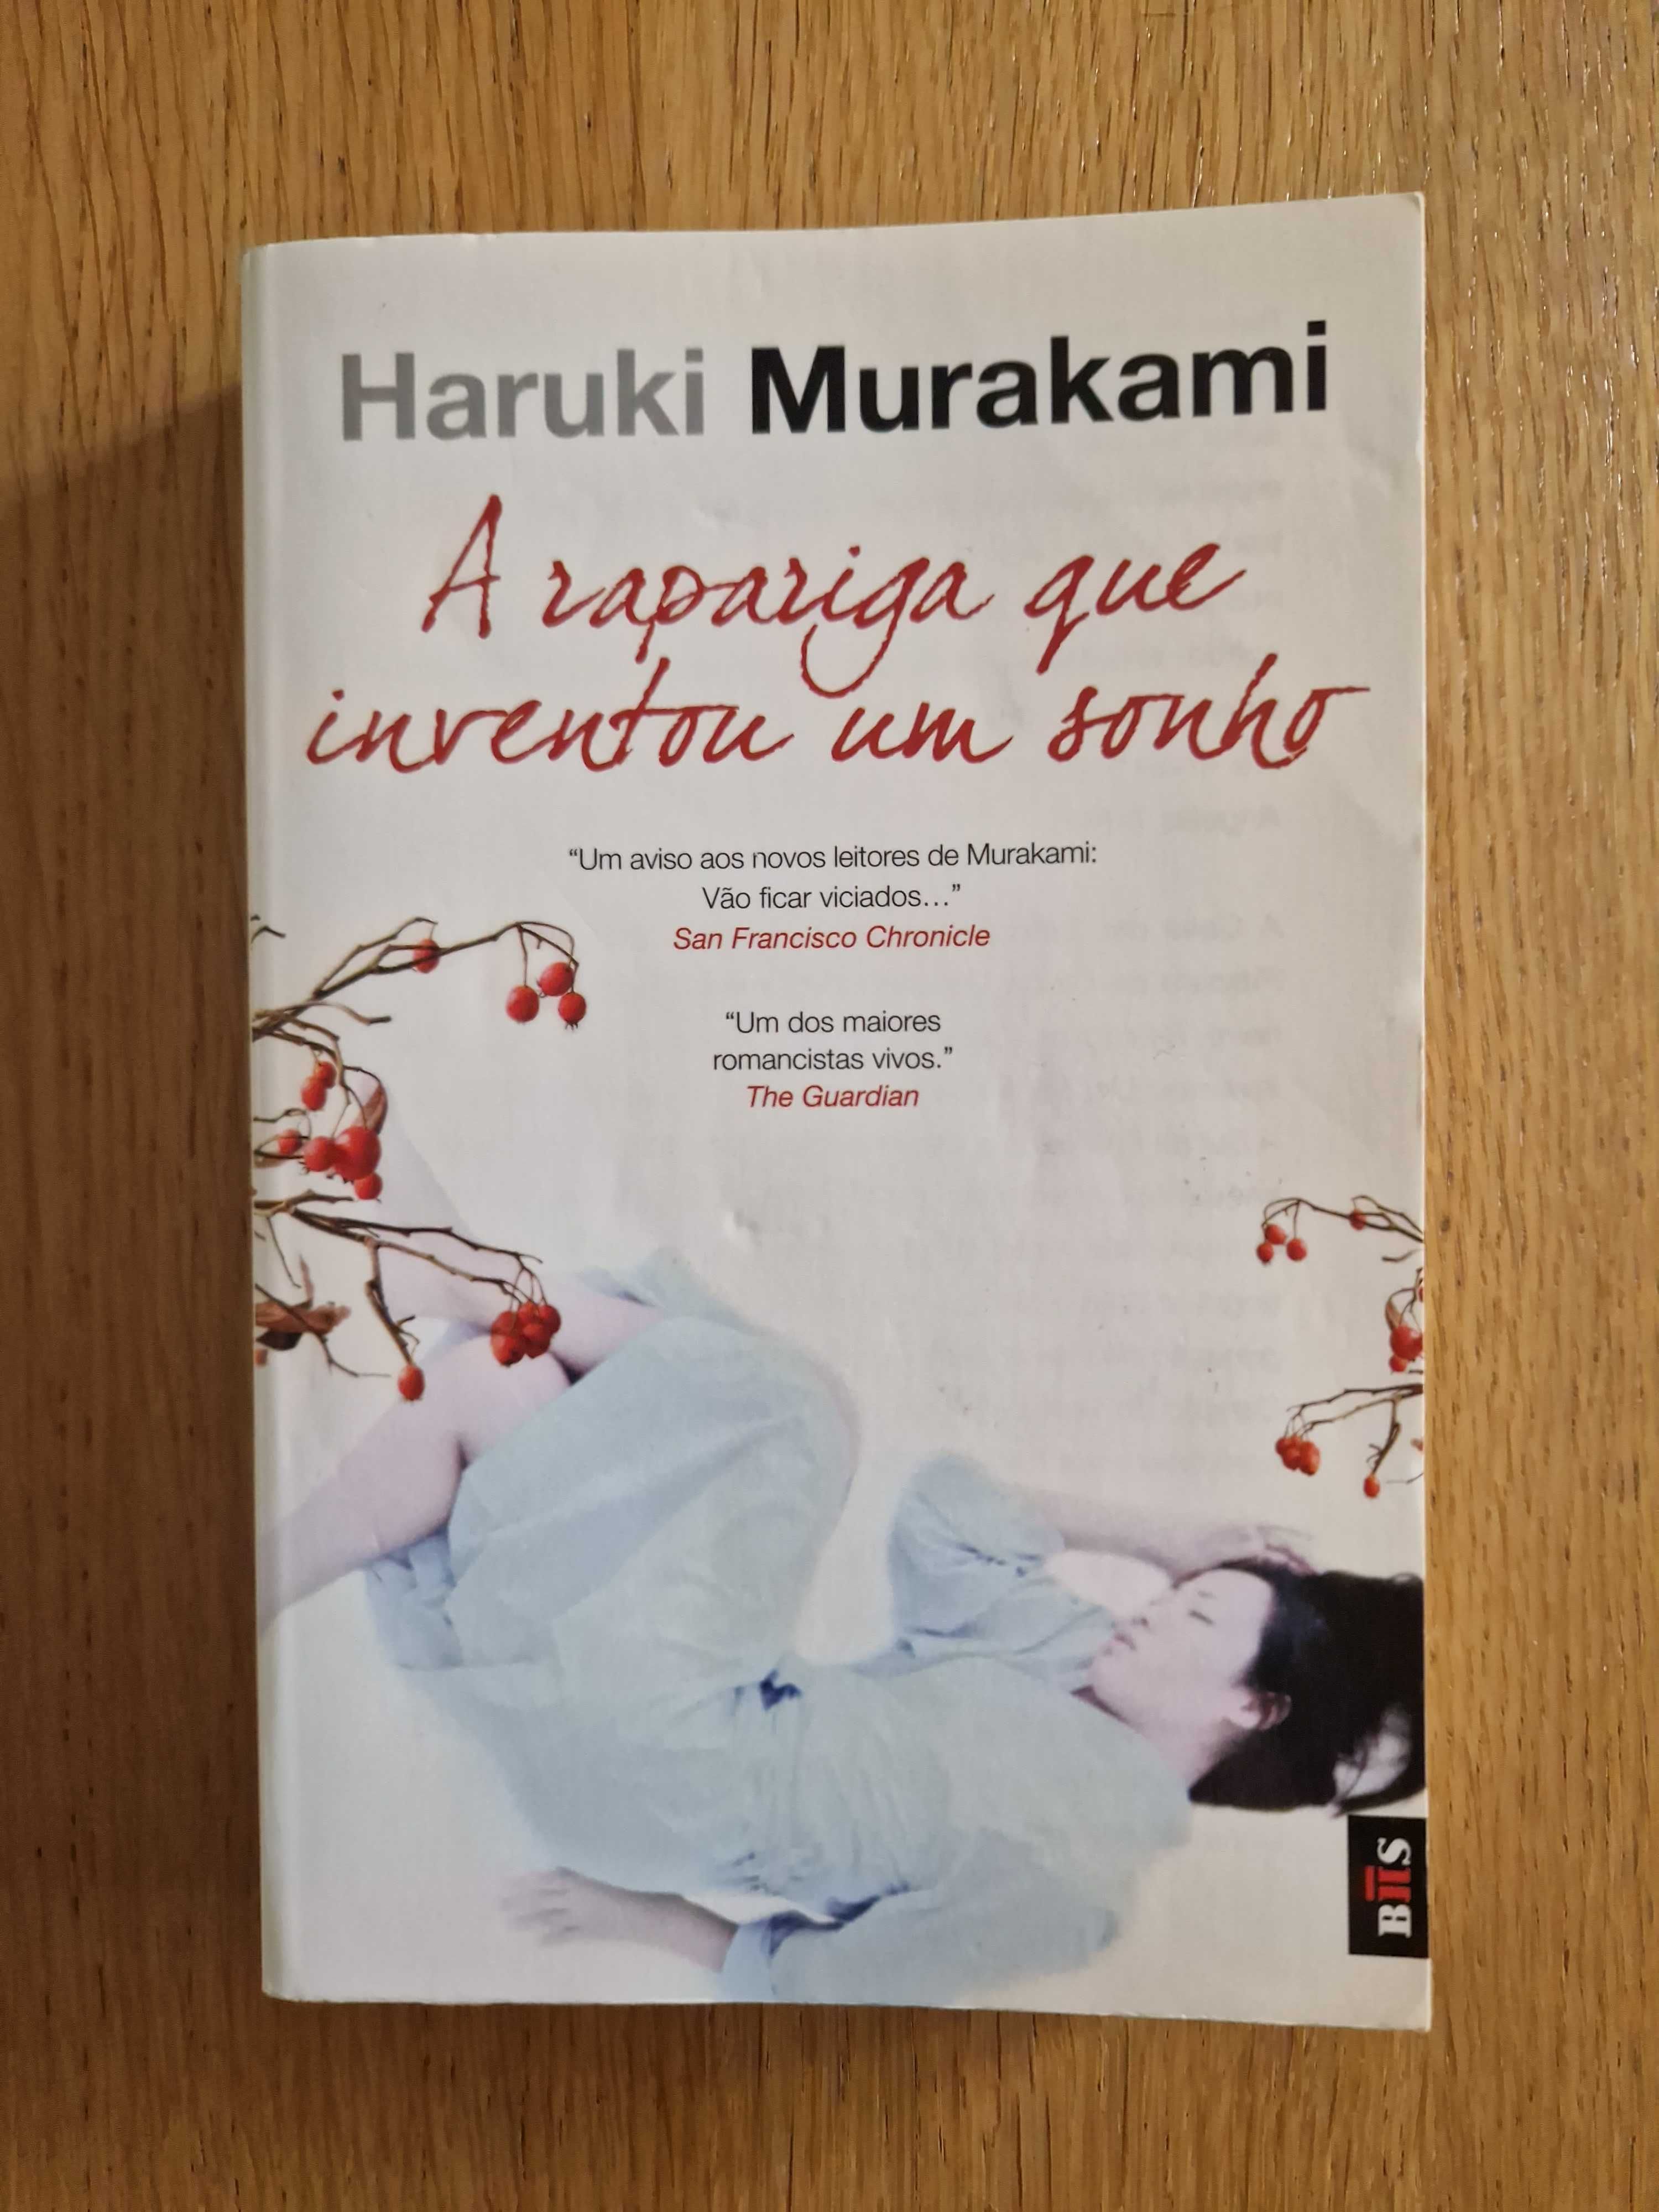 A rapariga que inventou um sonho de Haruki Murakami